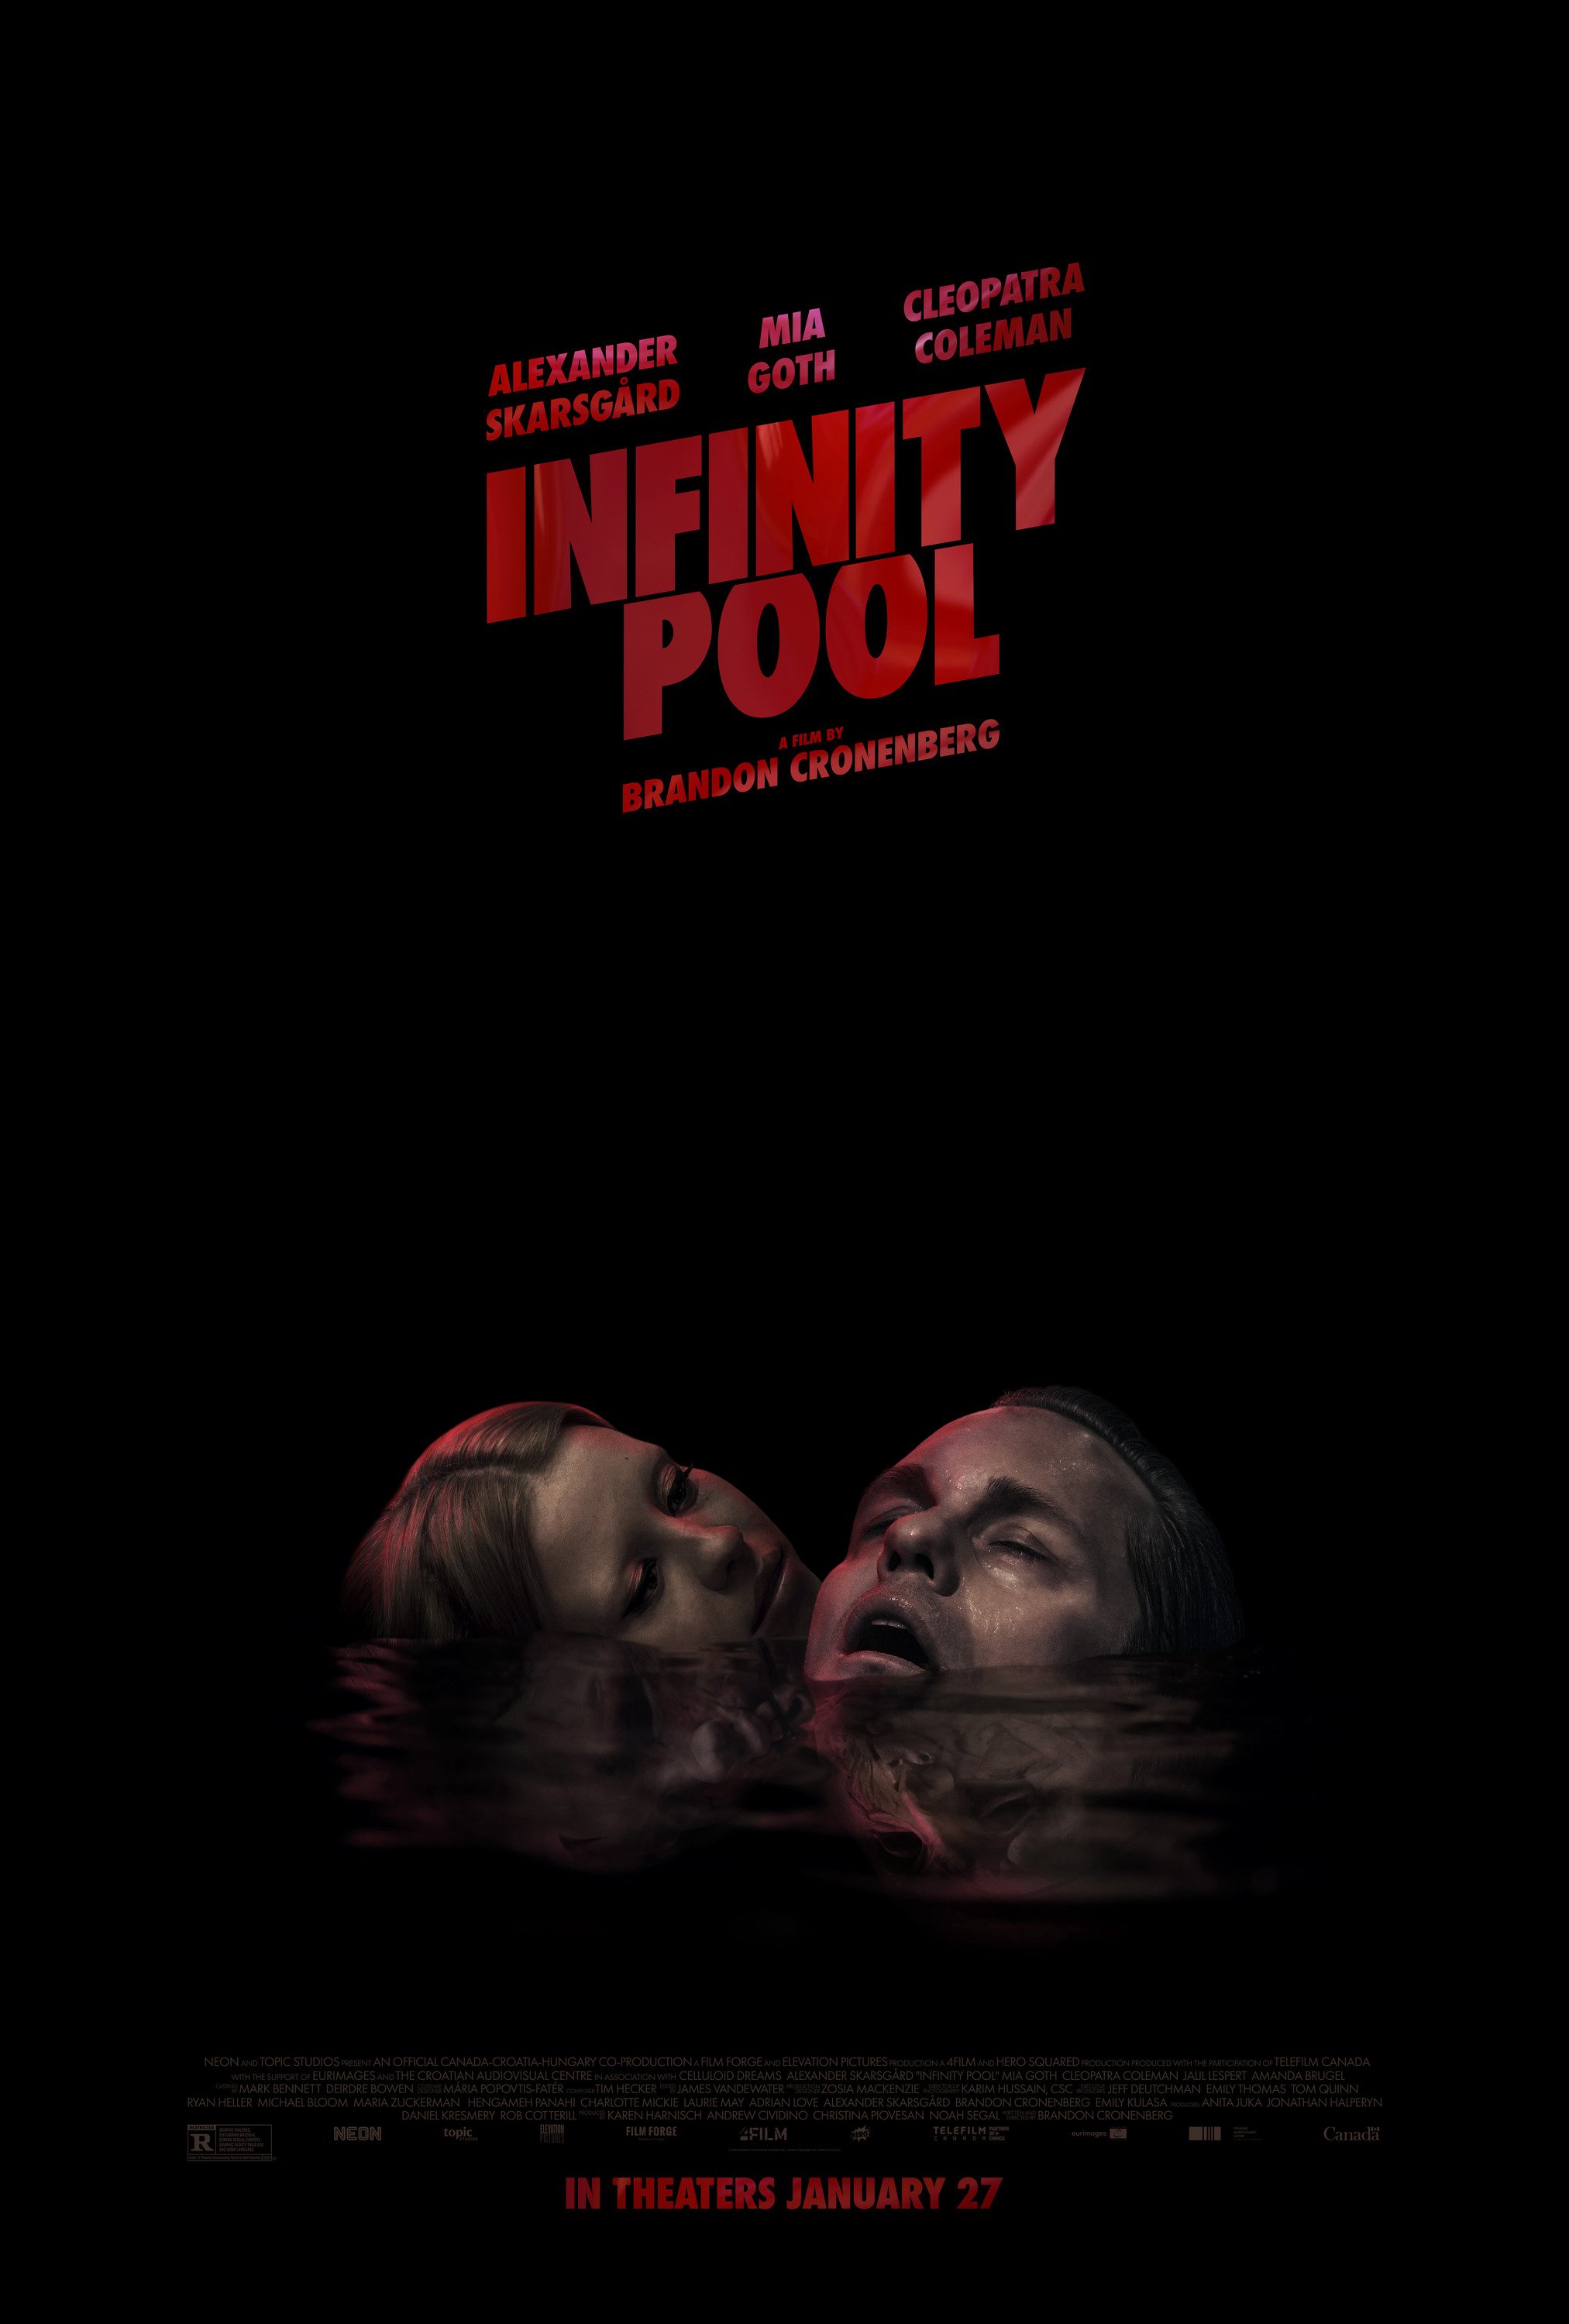 Infinity Pool images © NEON